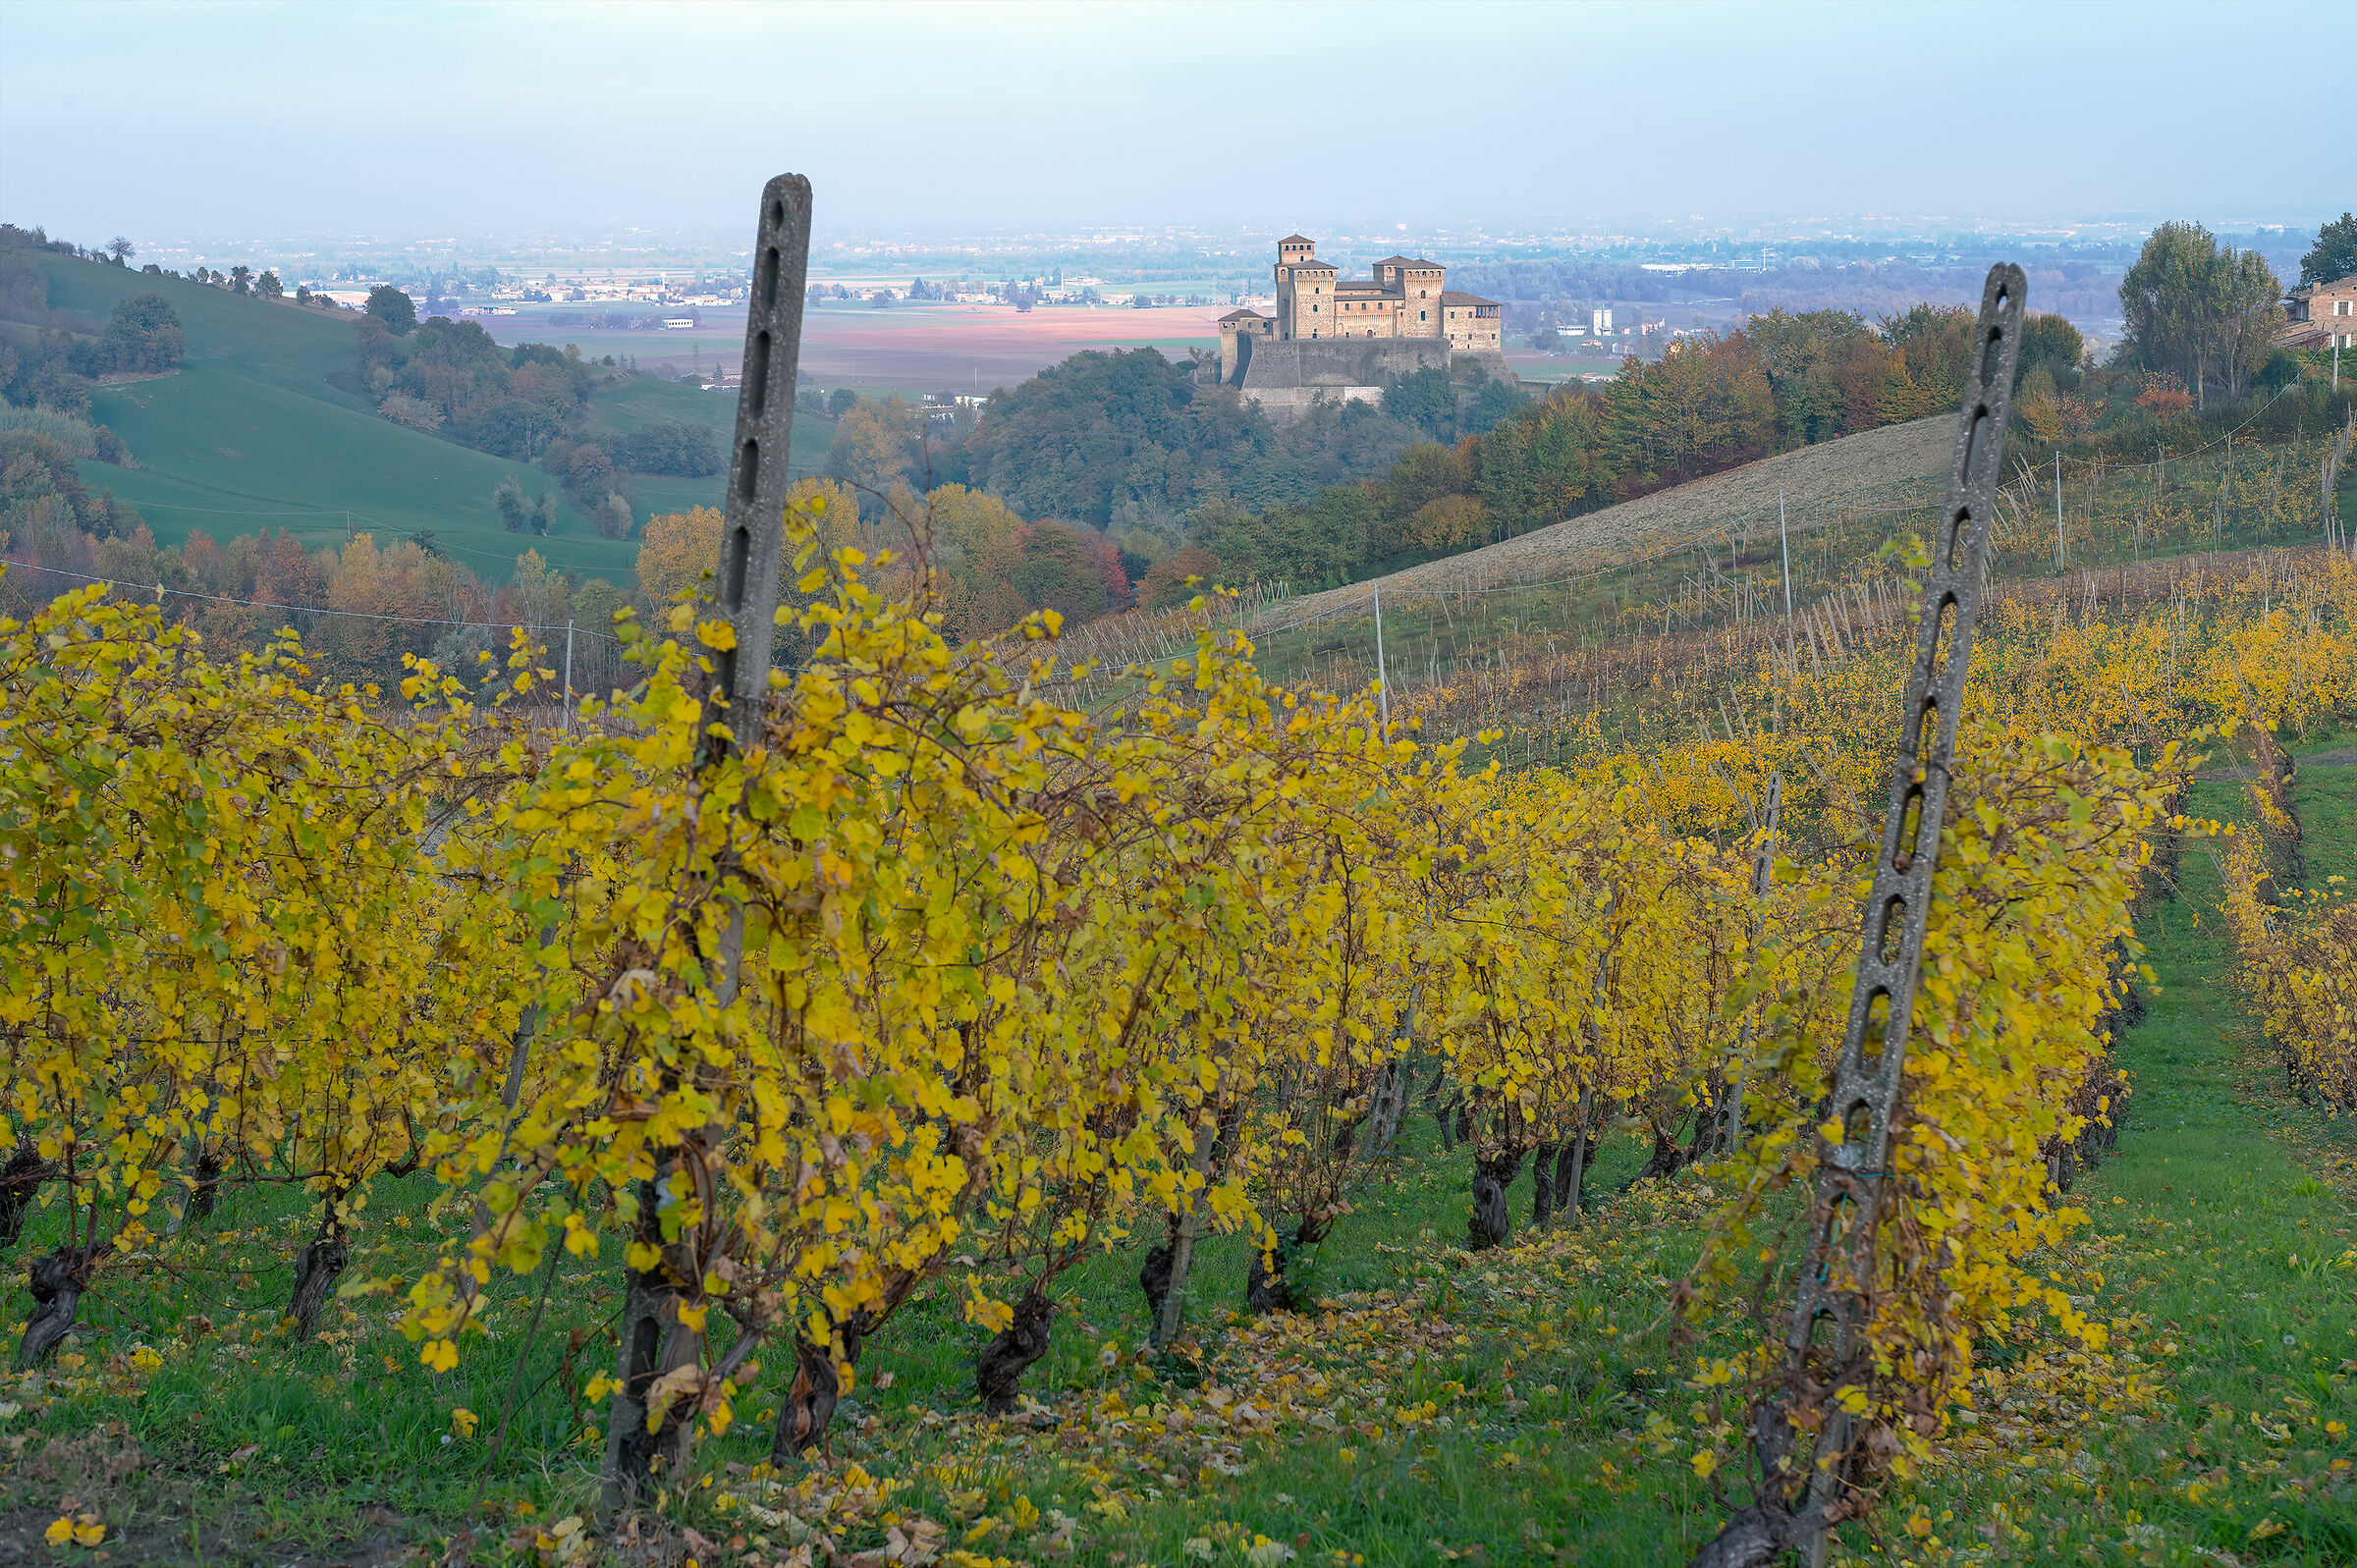 The castle of Torrechiara among the vineyards...